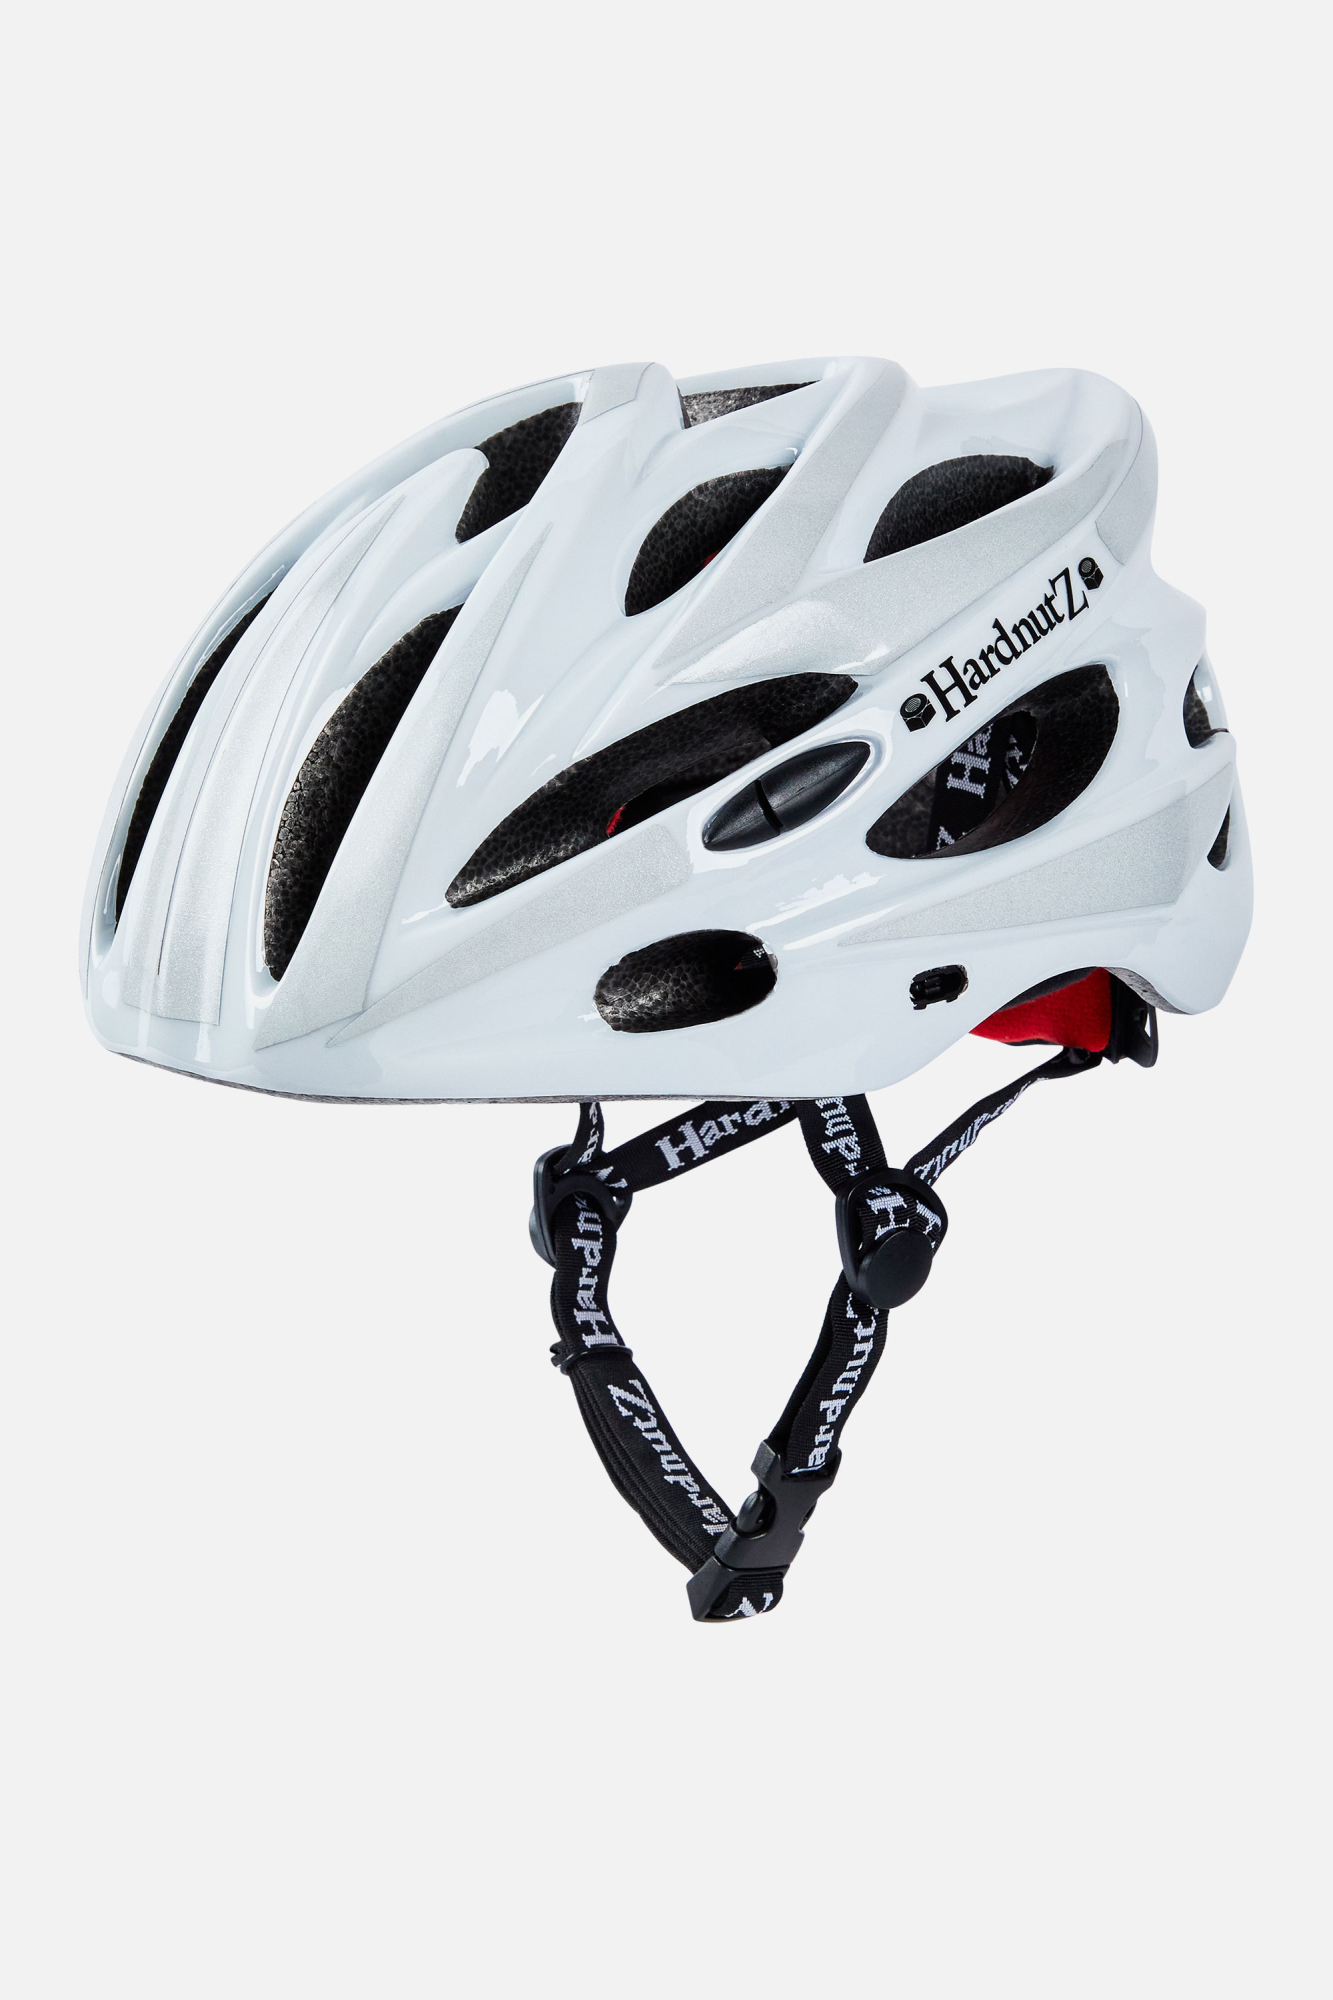 Hardnutz Unisex Cycle Helmet Black - Size: 54-61